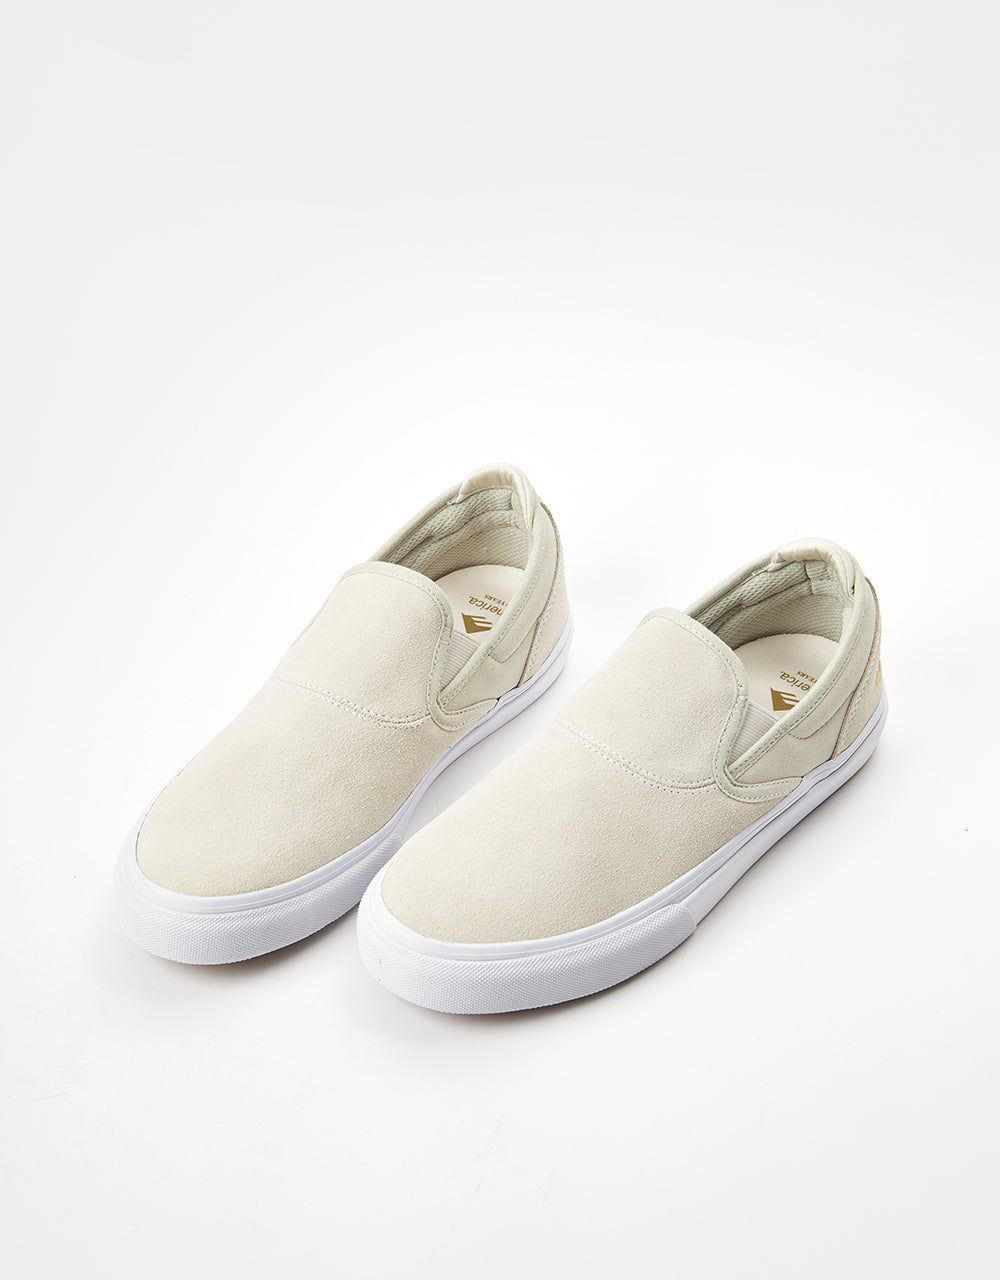 Emerica x This is Skateboarding Wino G6 Slip-On Skate Shoes - White